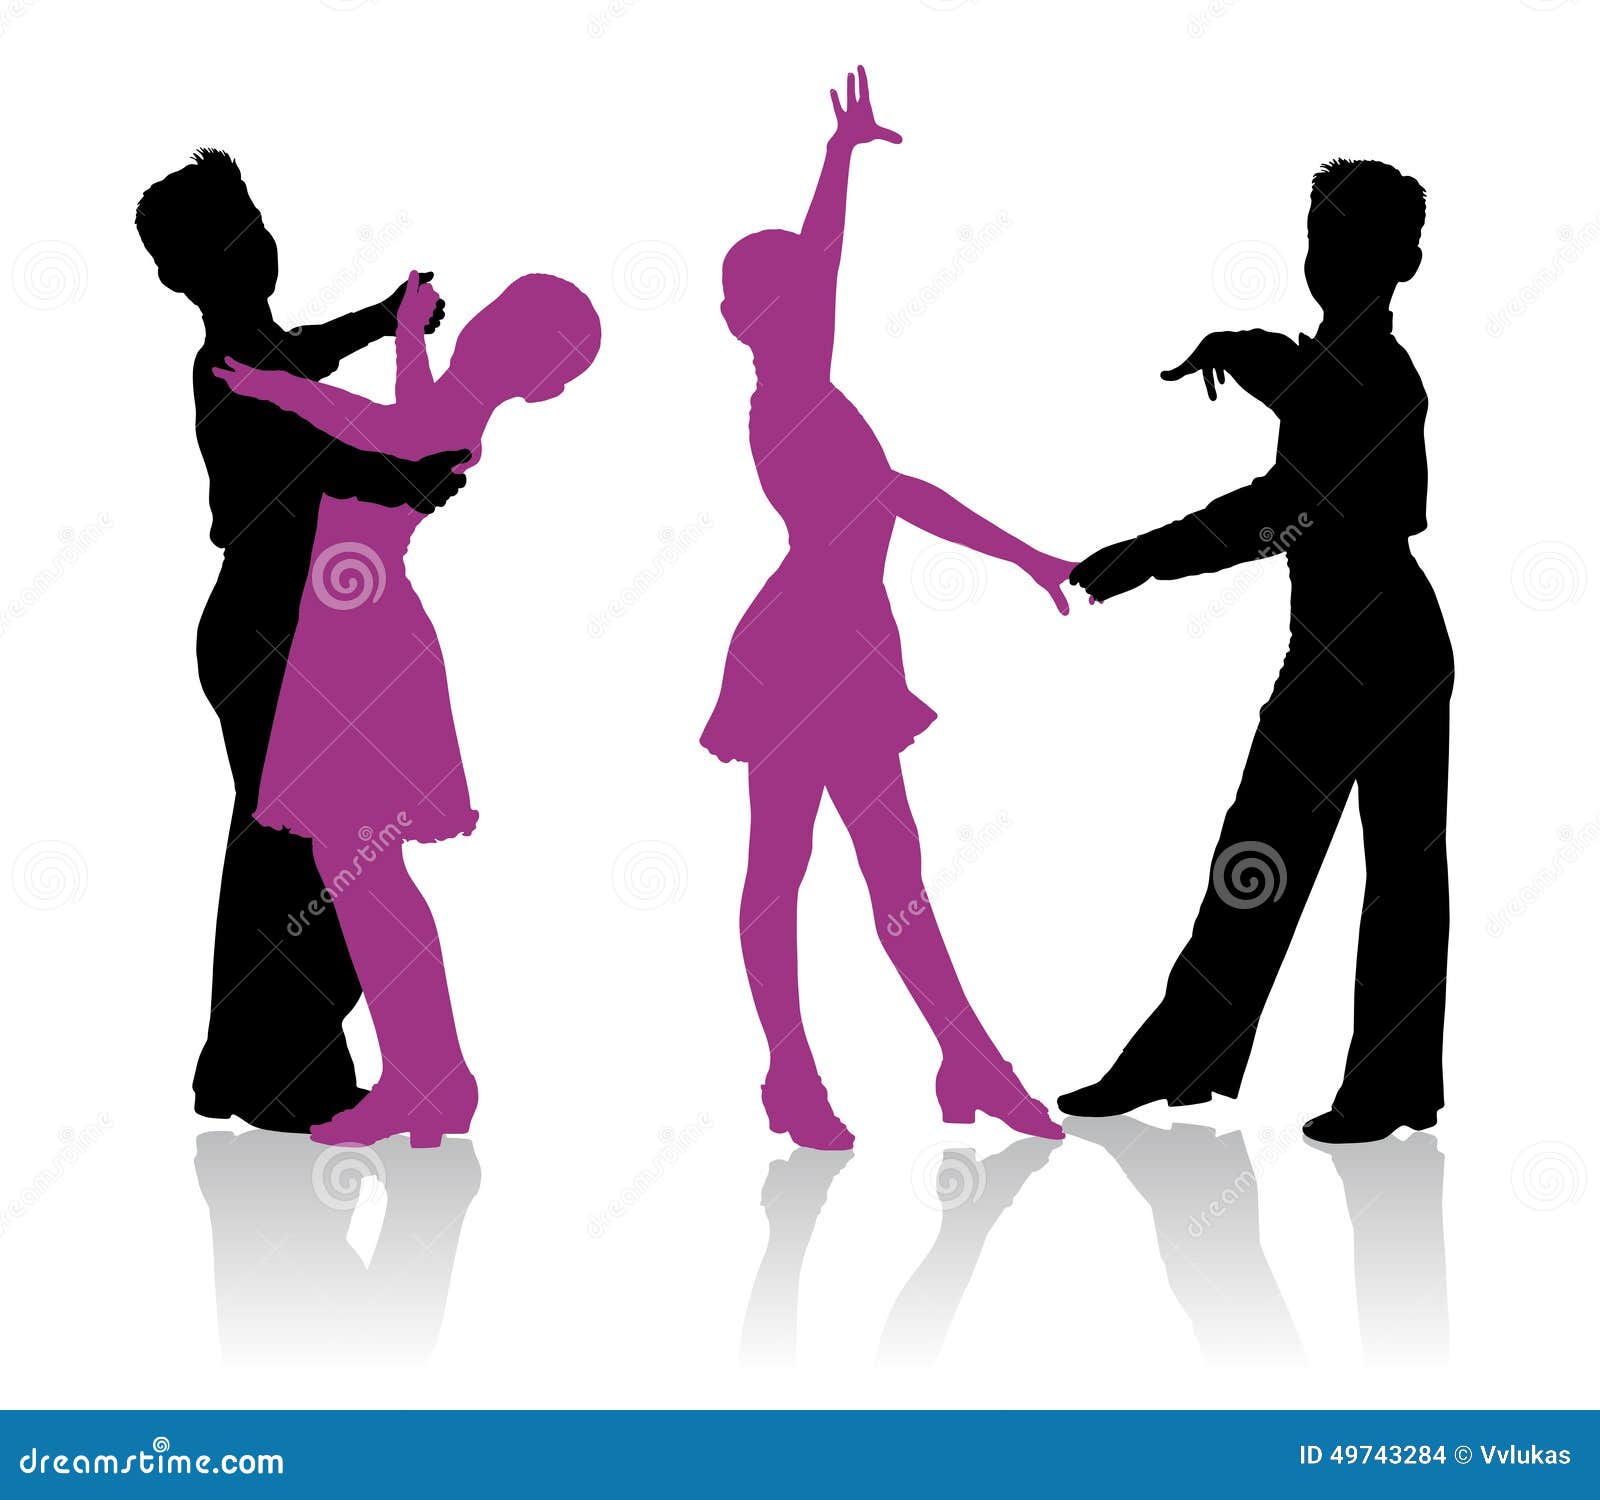 ballroom dance clipart silhouettes - photo #32